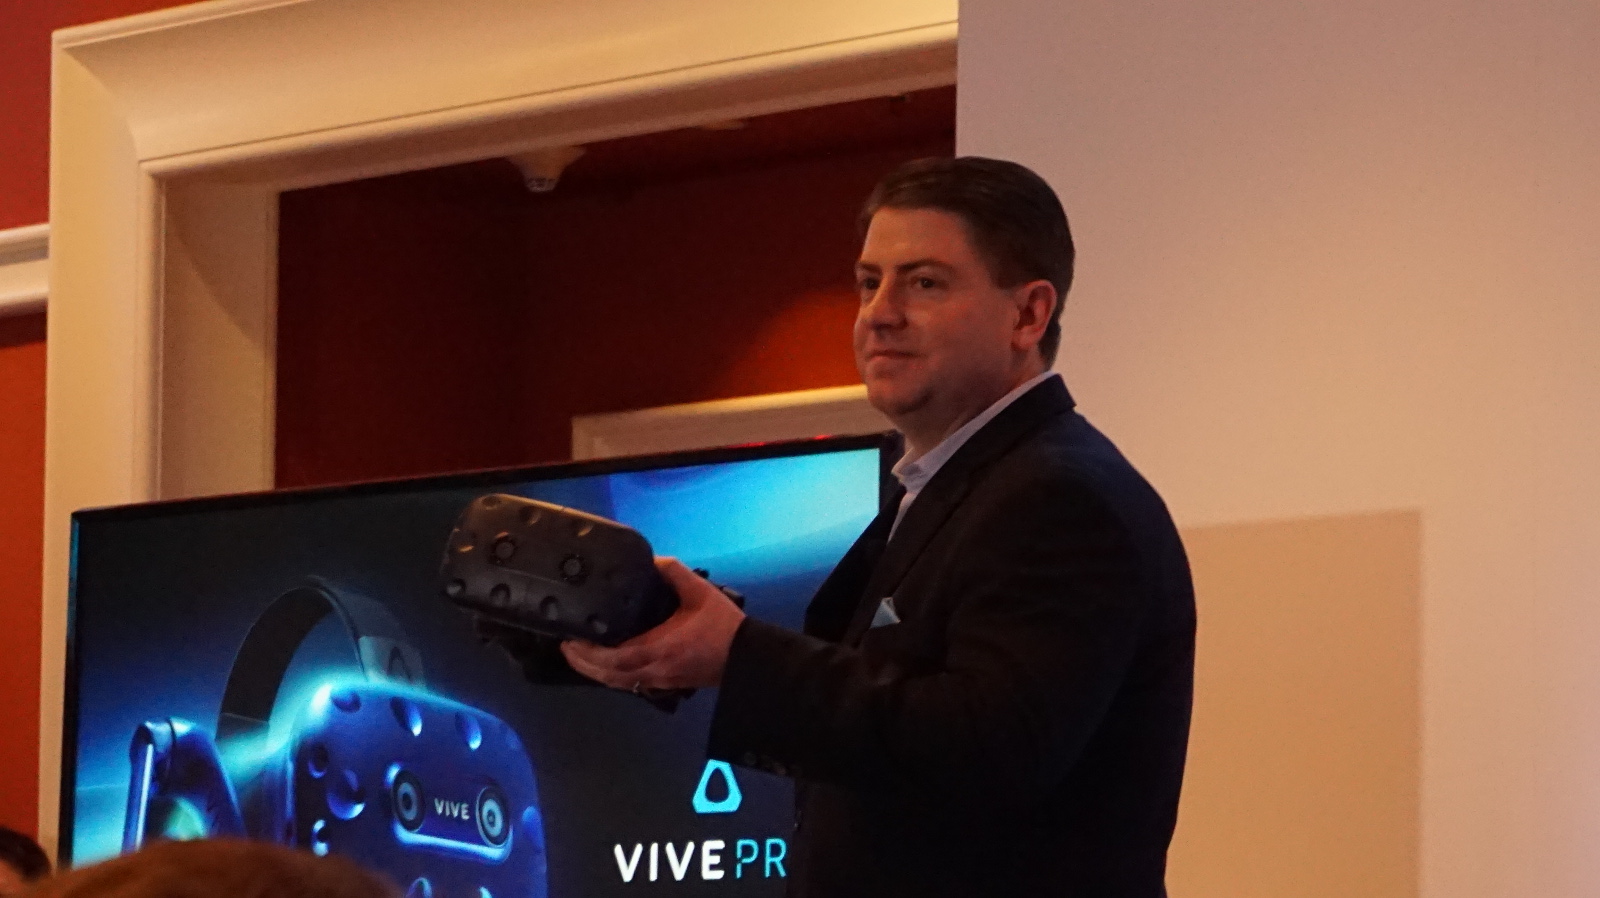 【CES 2018】HTC VIVE 推出 VIVE Pro，更高分辨率与无线操作体验